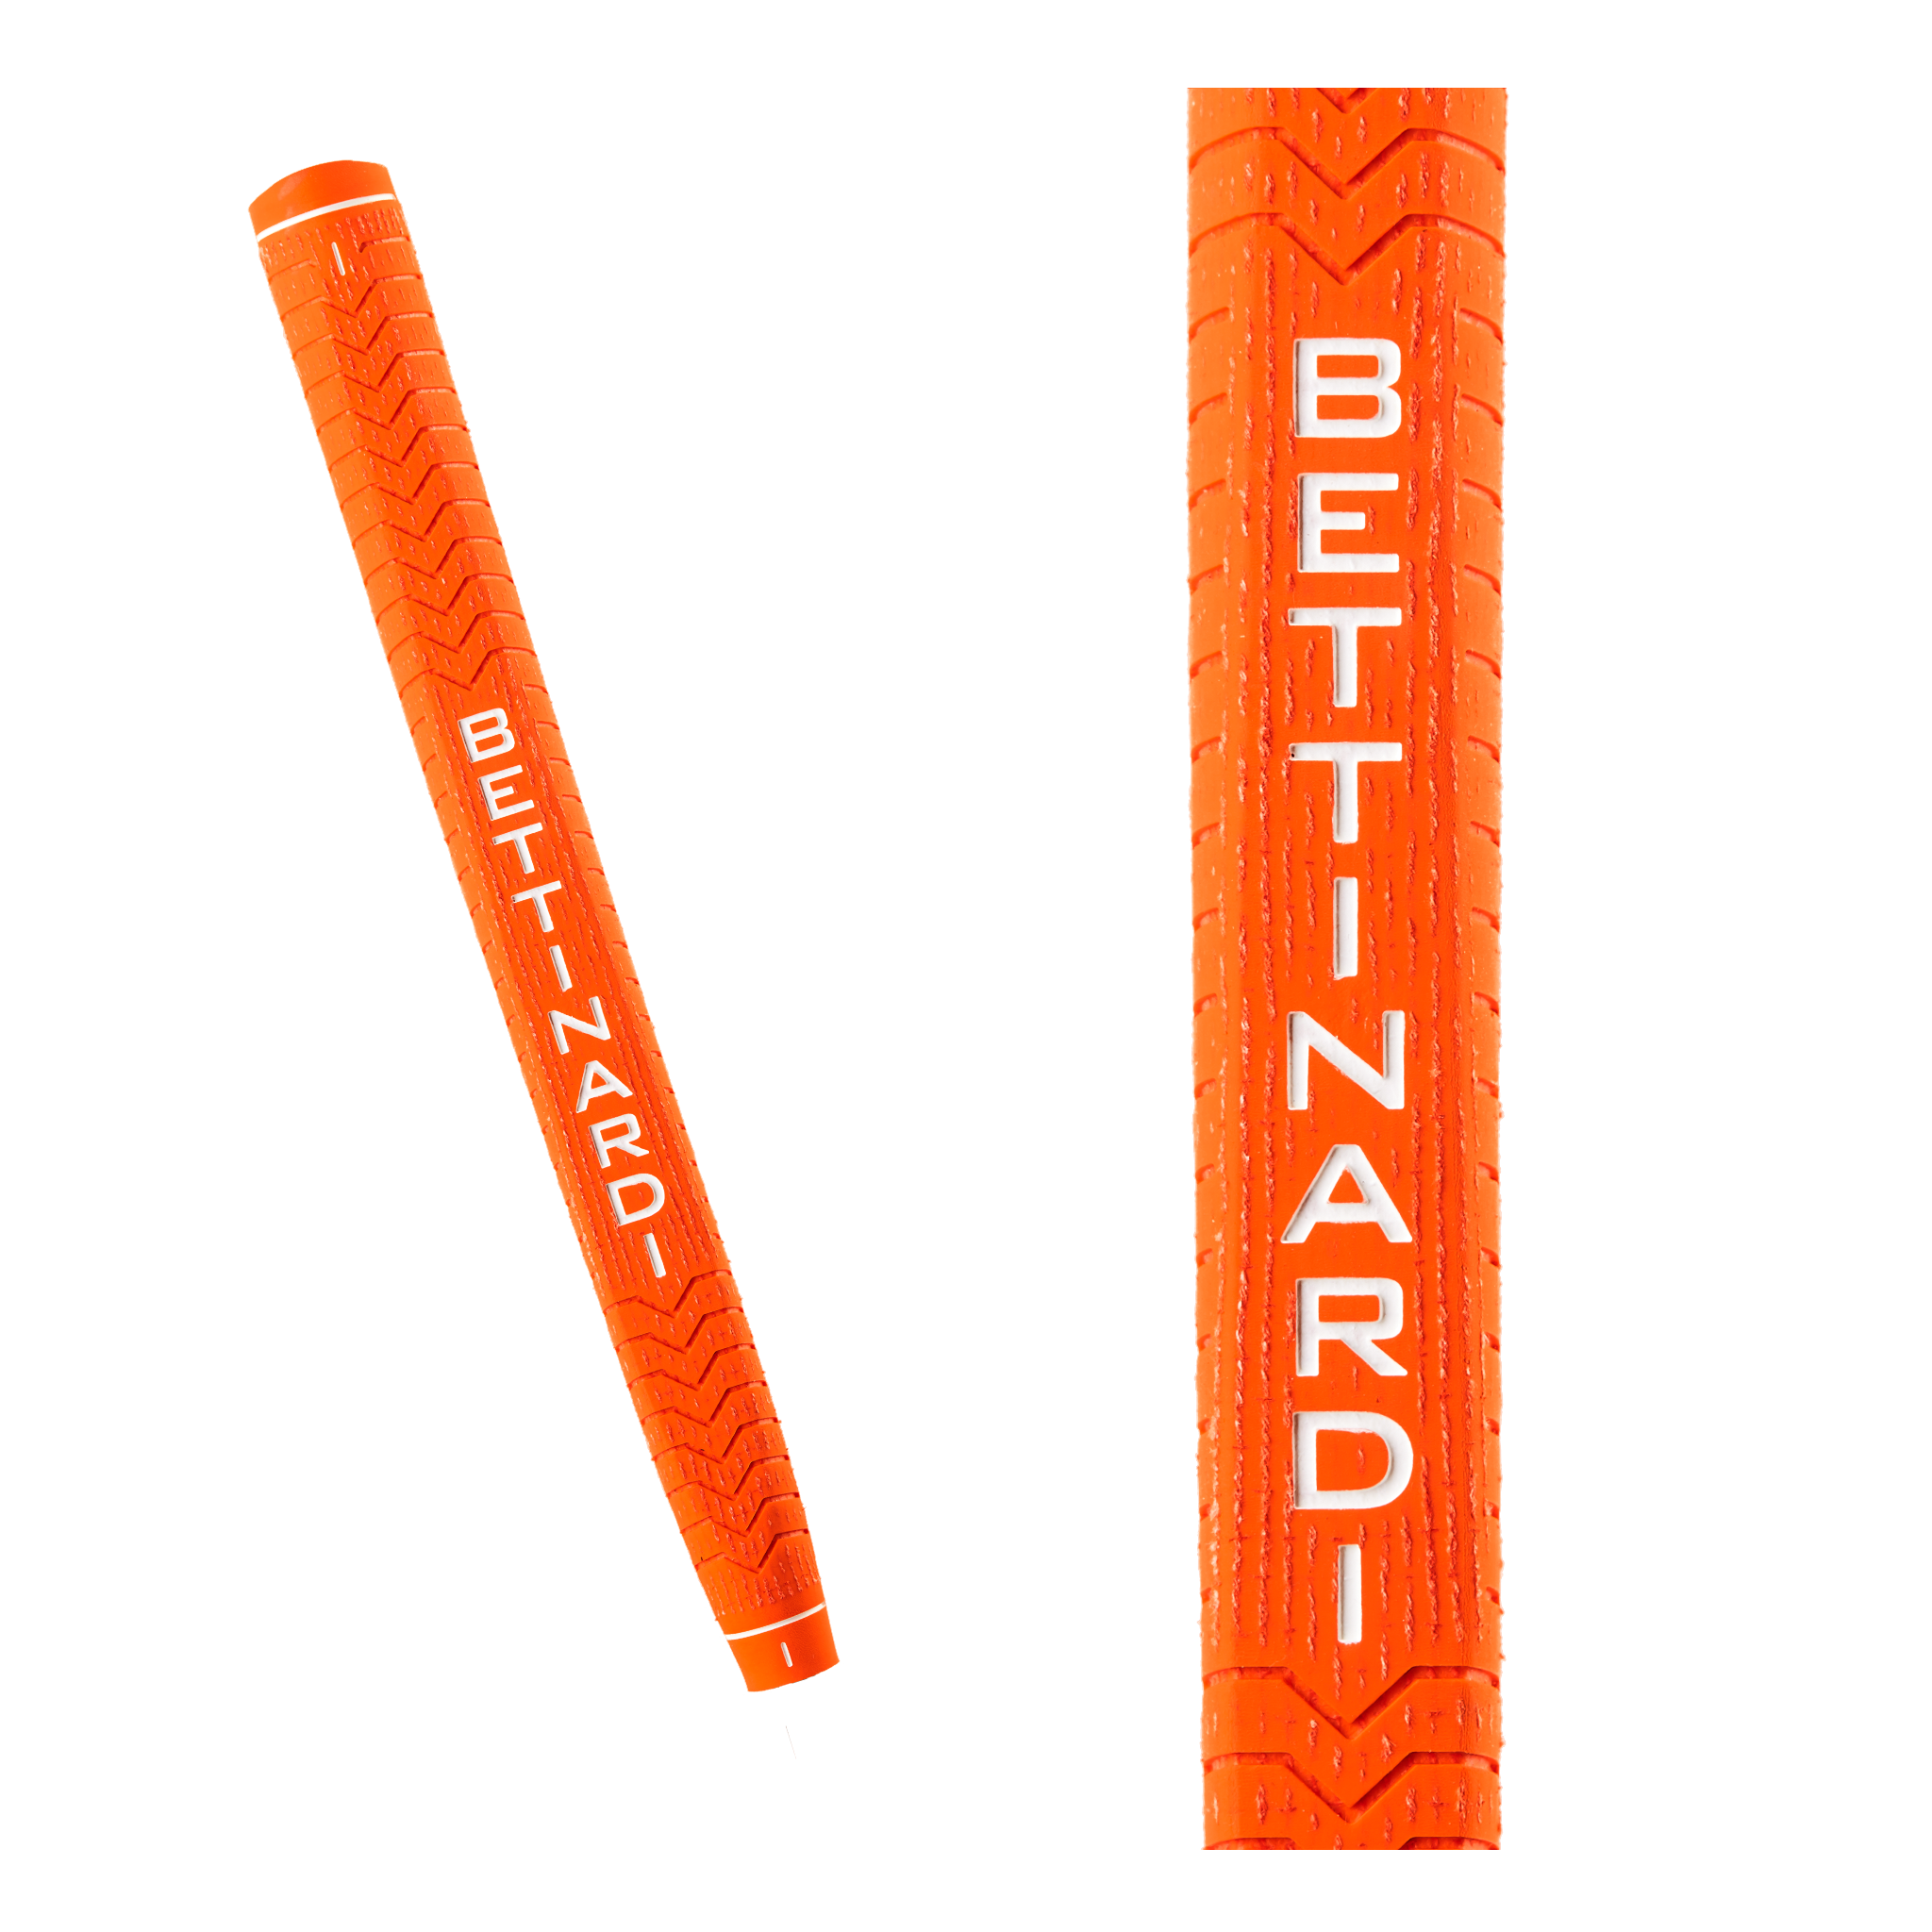 Orange Bettinardi Deep Etched Putter Grip (Standard)